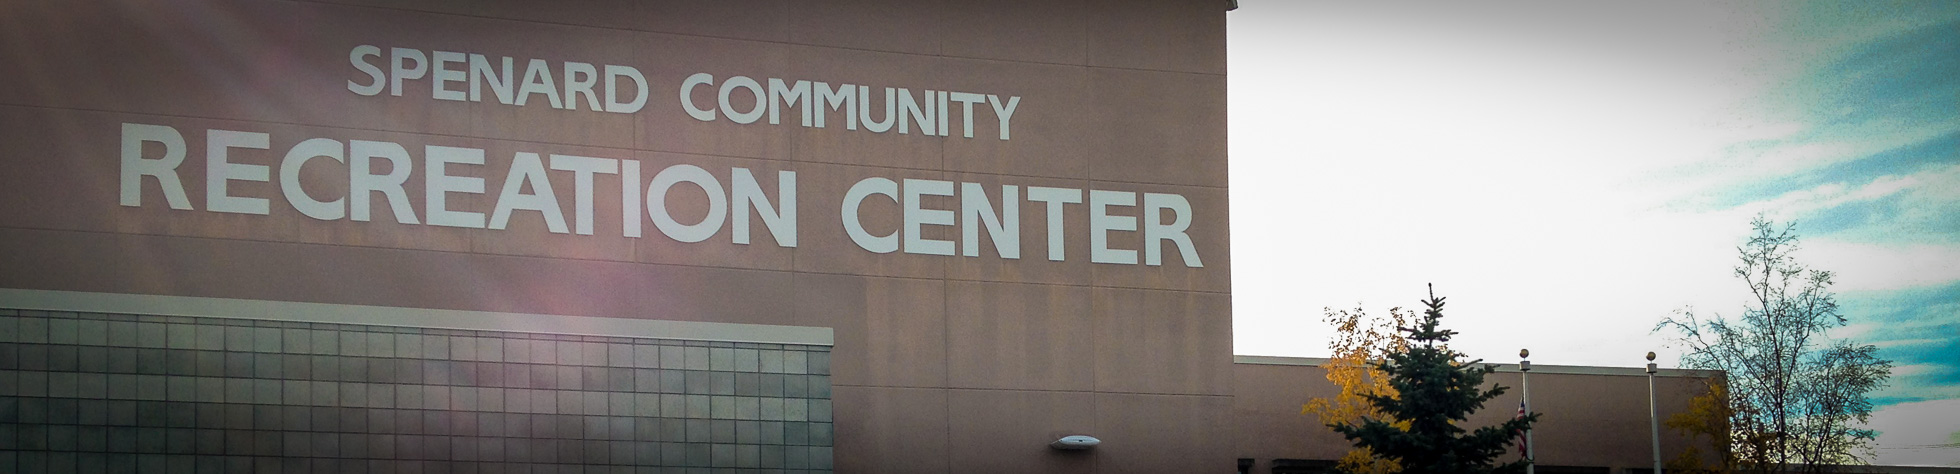 Spenard Community Recreation Center